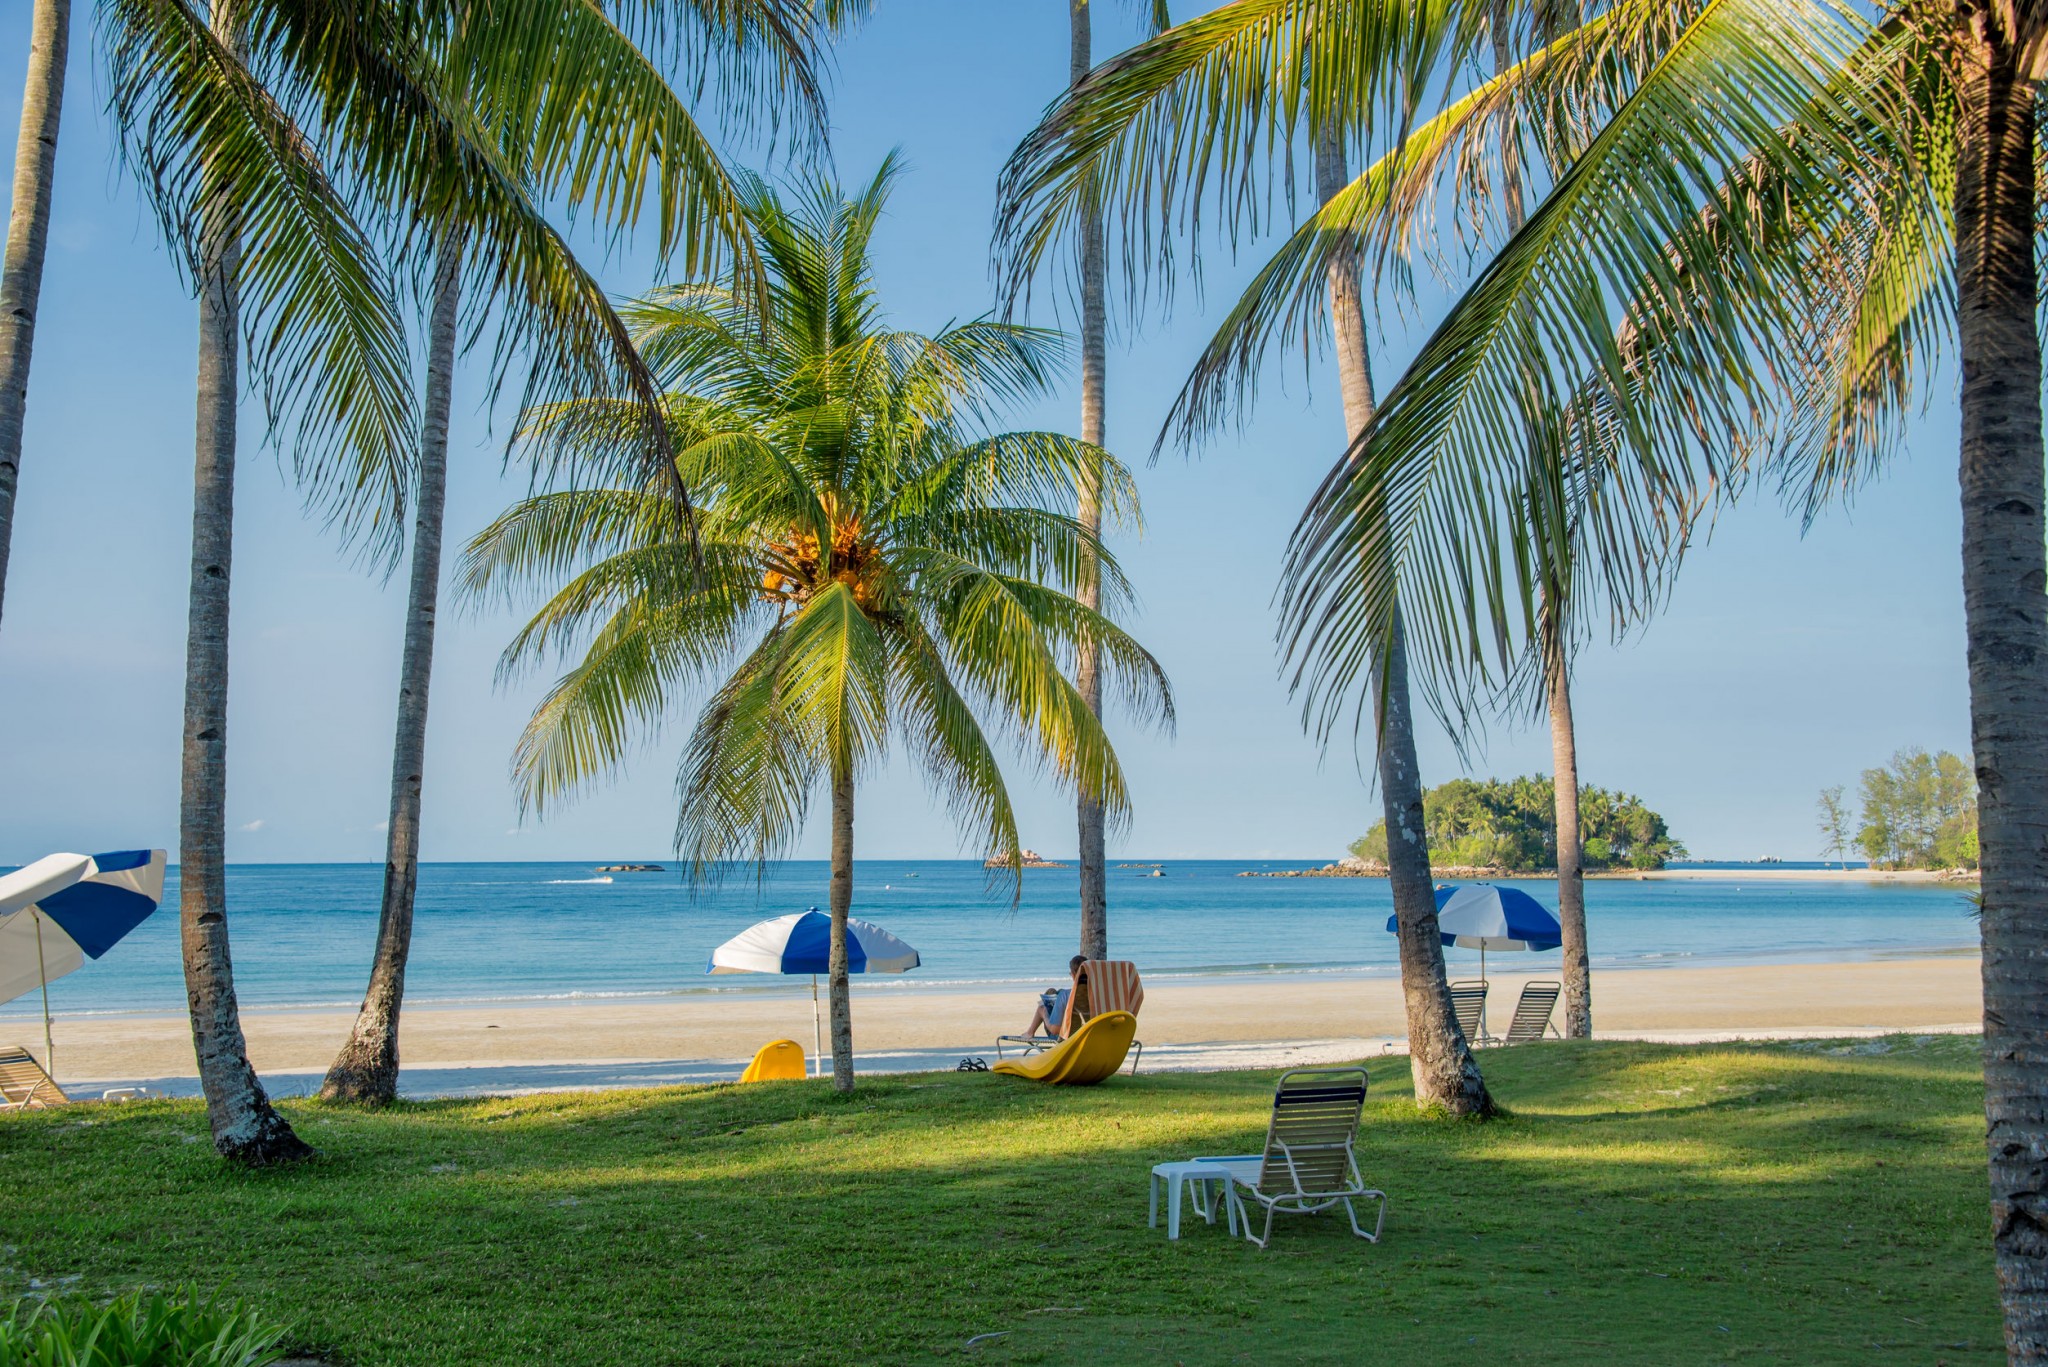 Bintan Tropical beach landscape with palm trees